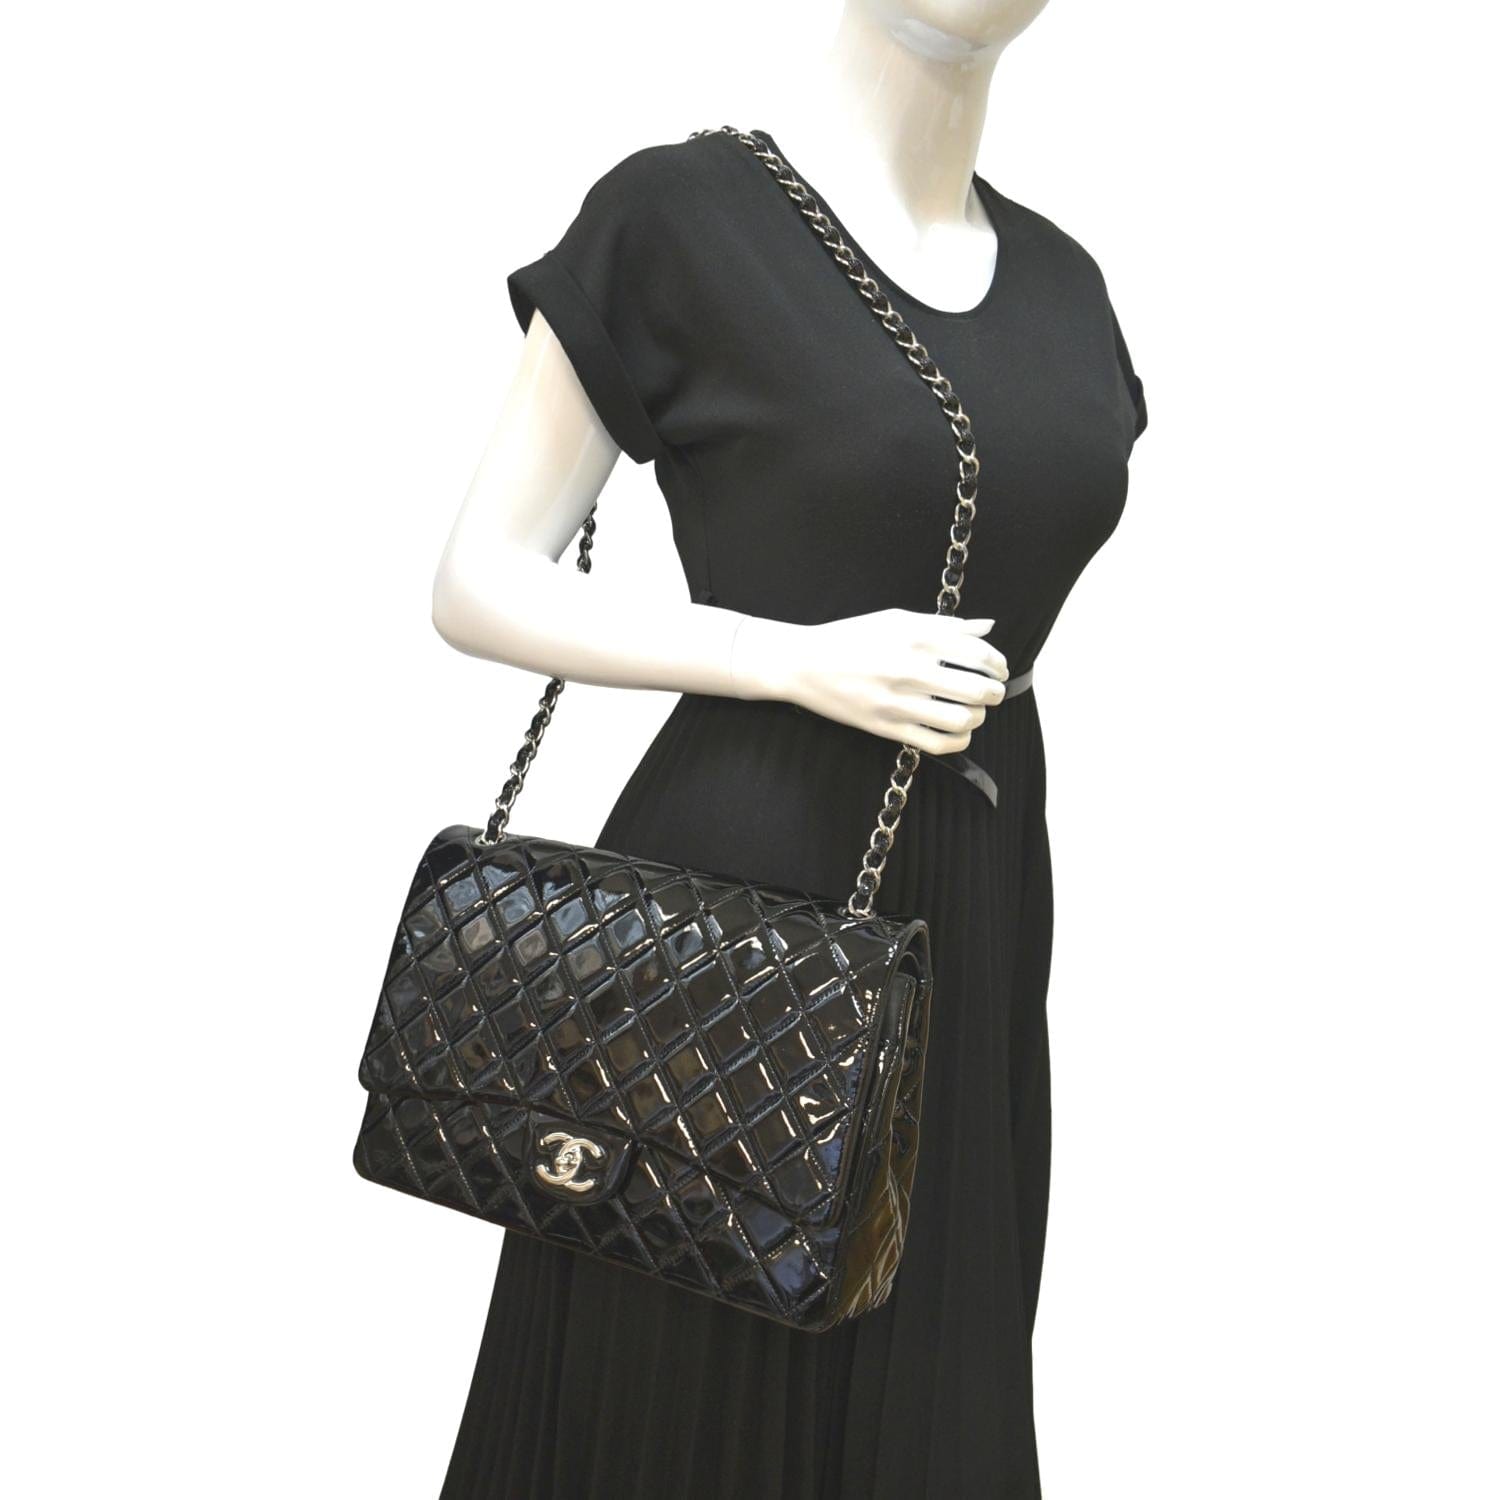 Chanel Black Quilted Caviar Jumbo Classic Single Flap Bag